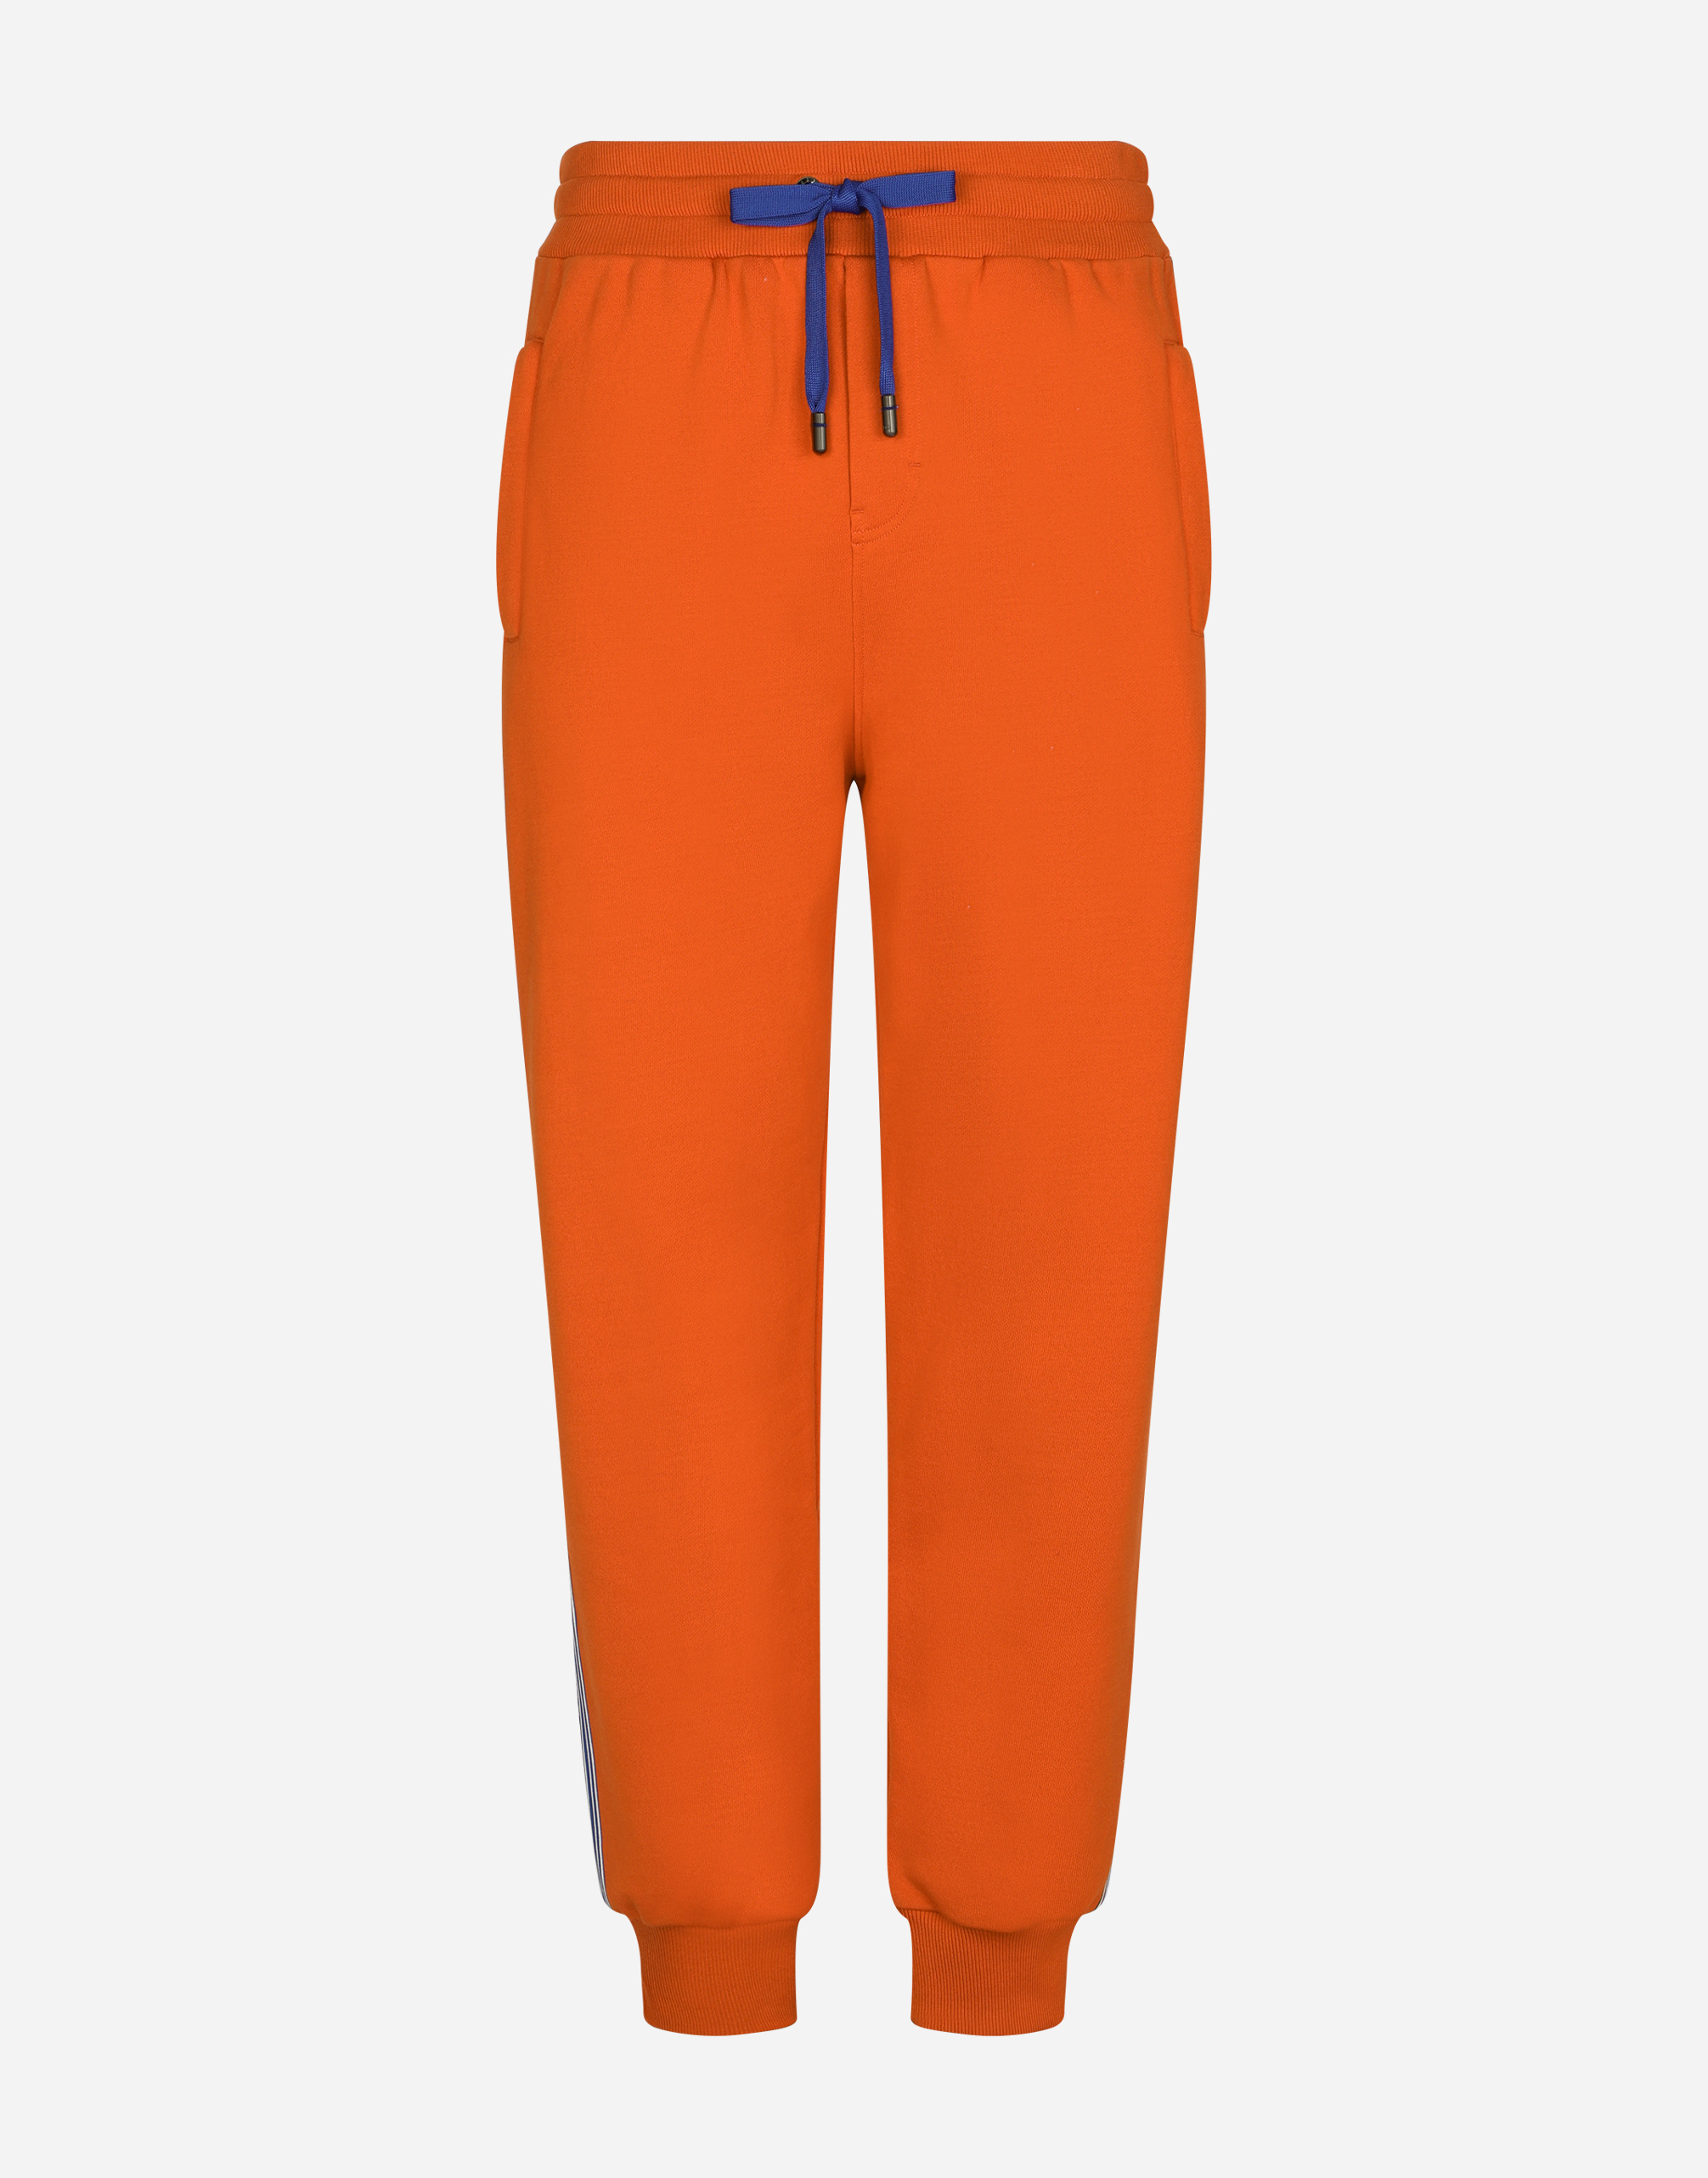 Dolce & Gabbana Jogging Pants With Branded Side Bands In Bright Orange